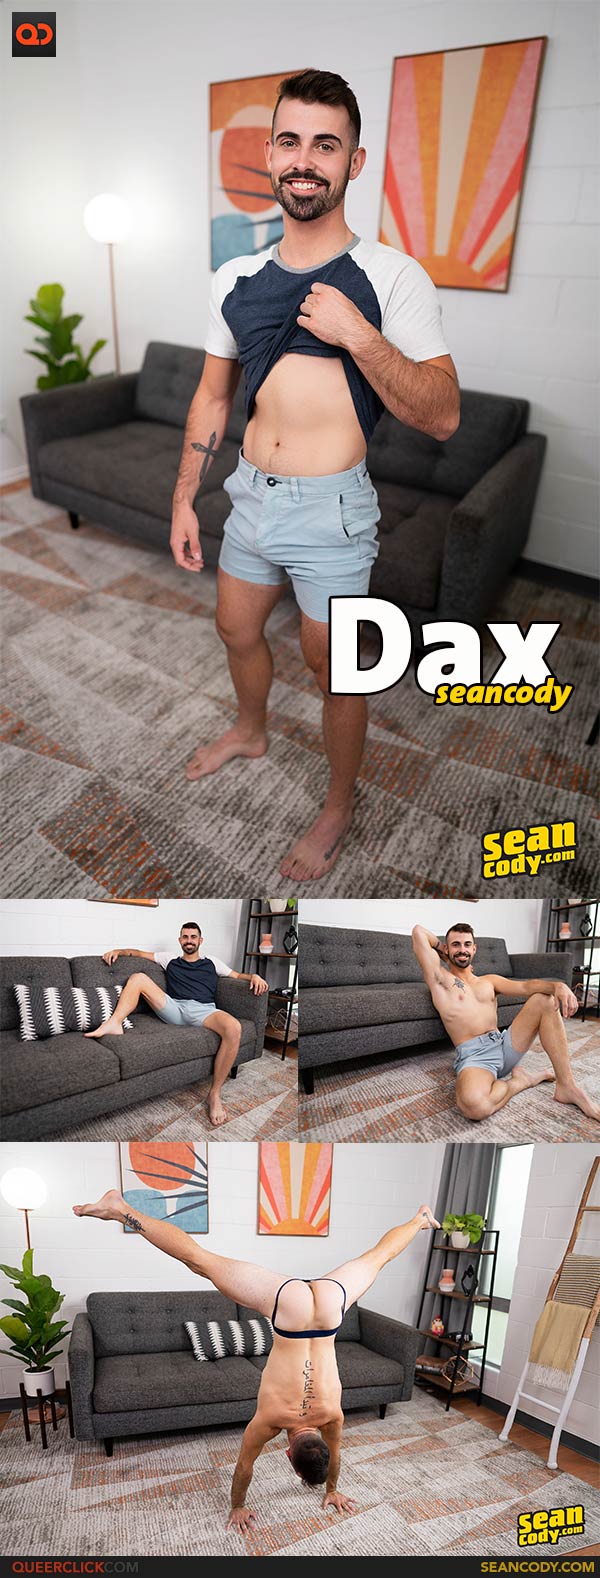 Sean Cody: Dax